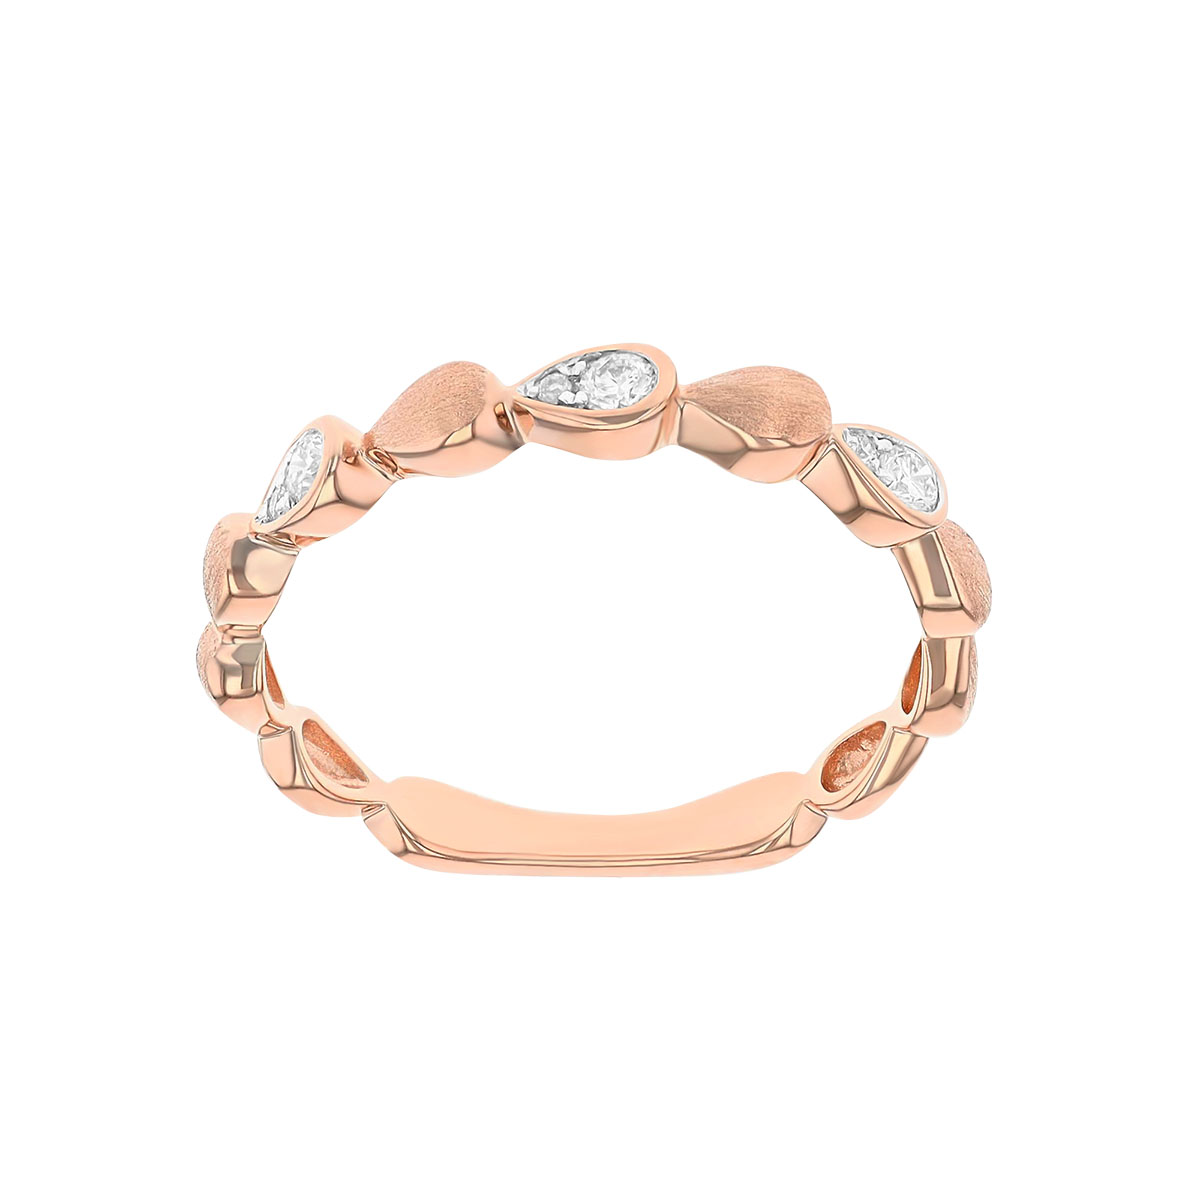 Diamond Teardrop Patterned Ring in Rose Gold | Borsheims